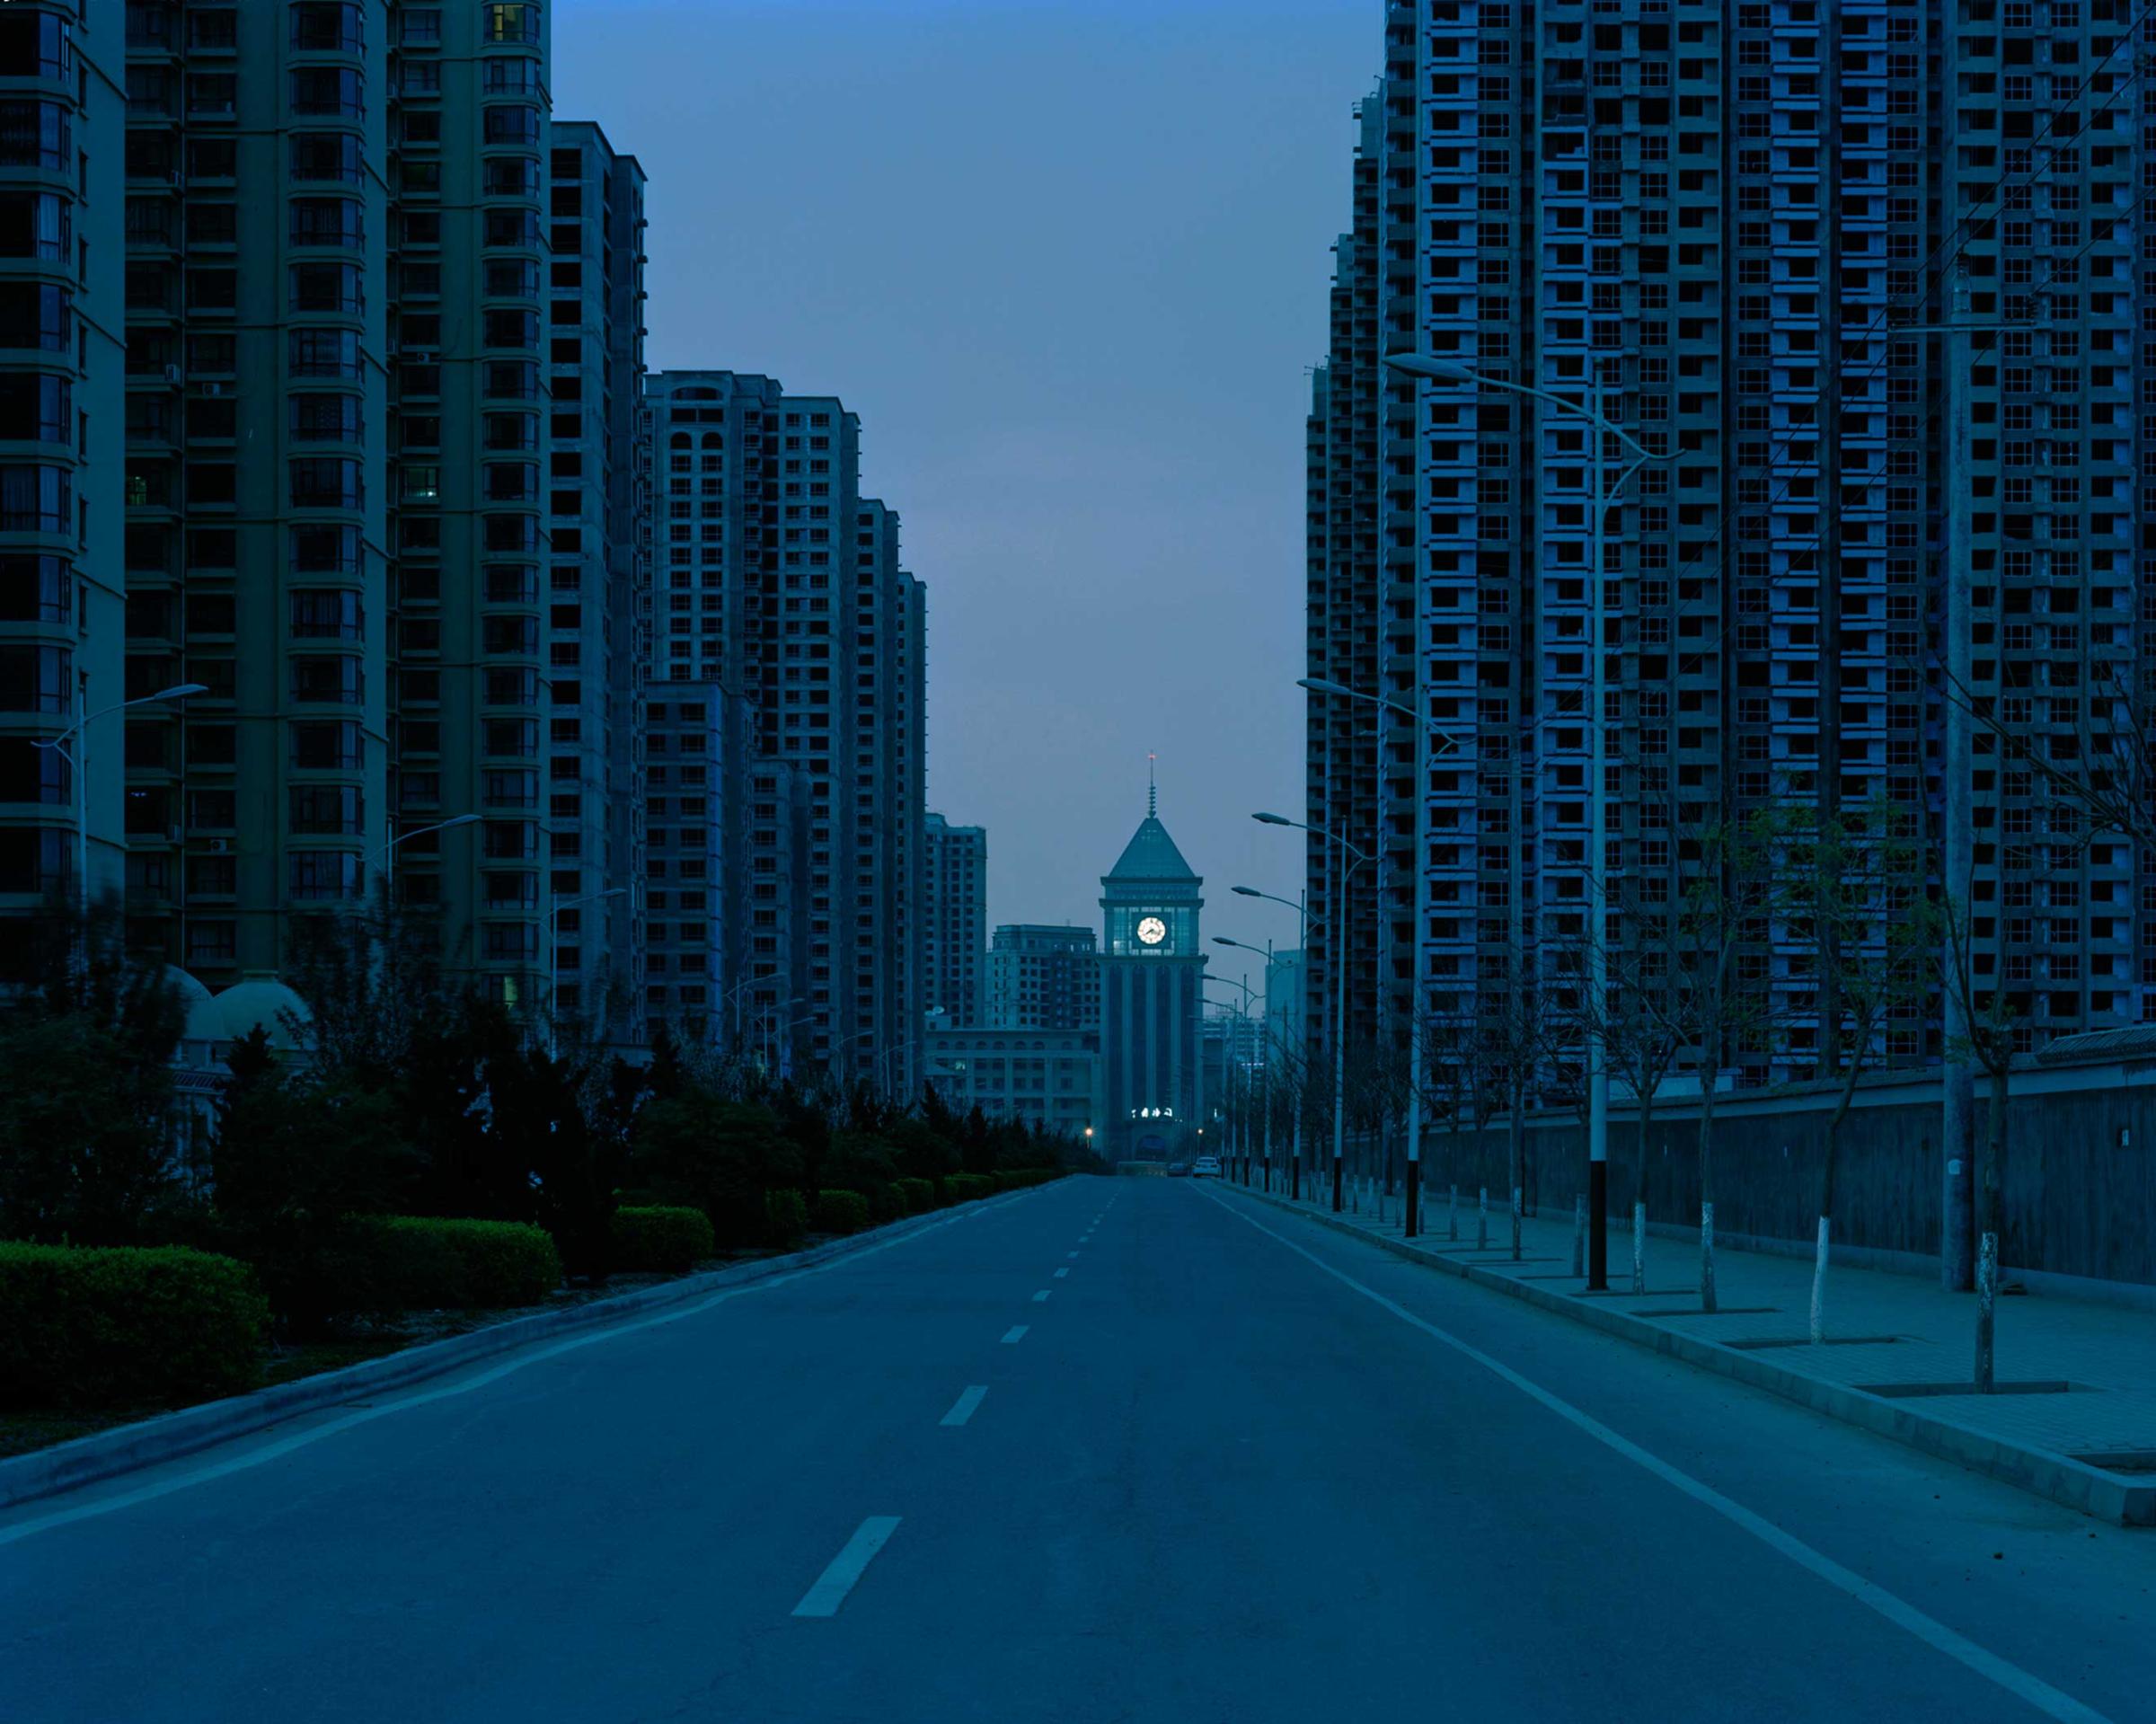 julien-chatelin-china-west-development-nature-city-construction-GDP_01